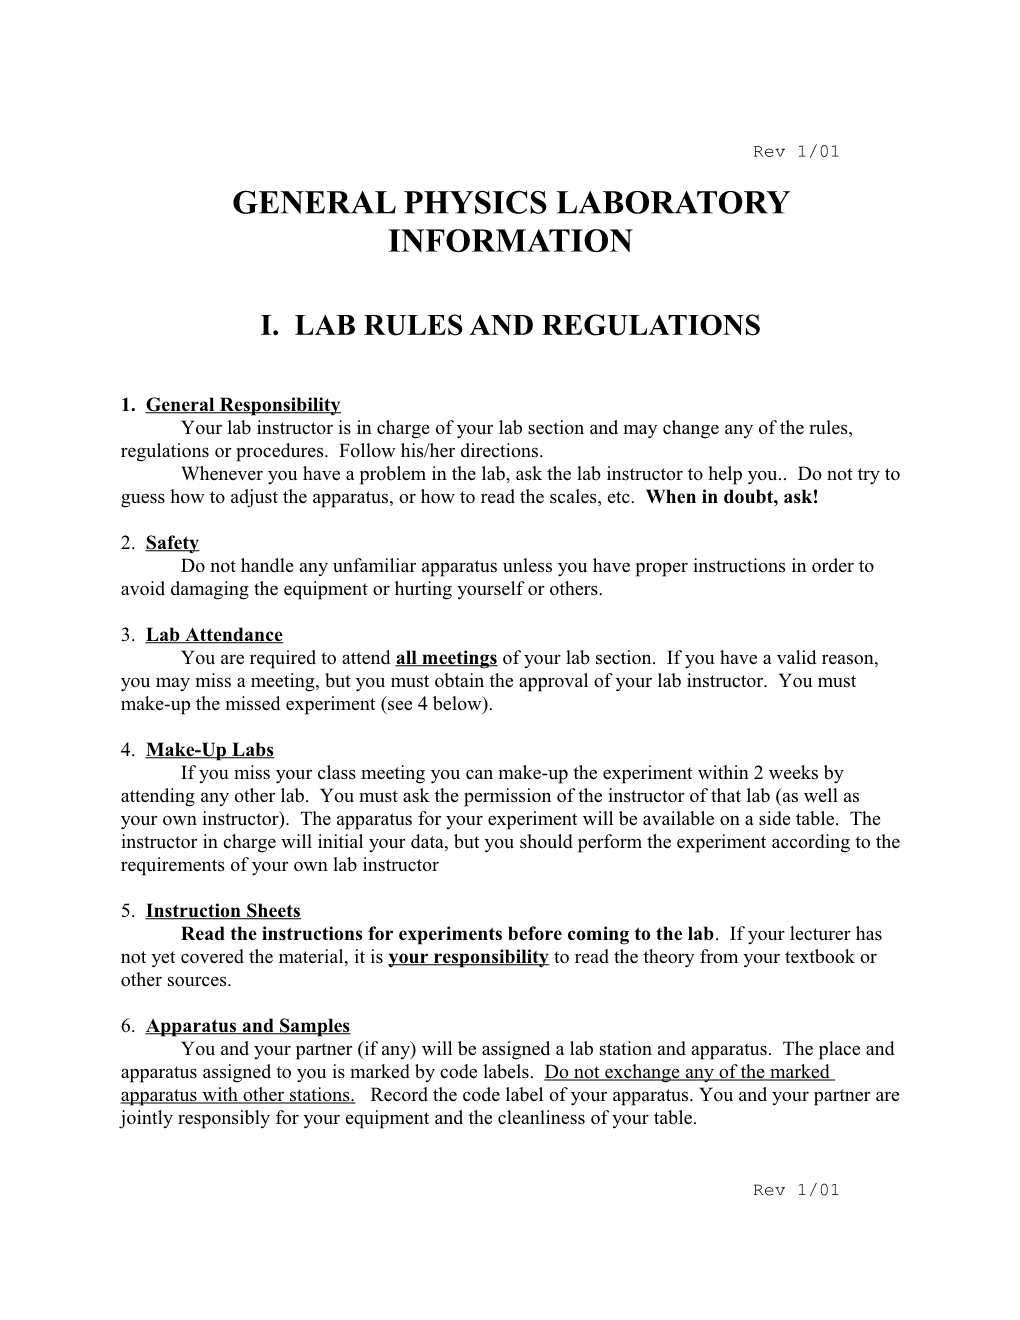 General Physics Laboratory Information